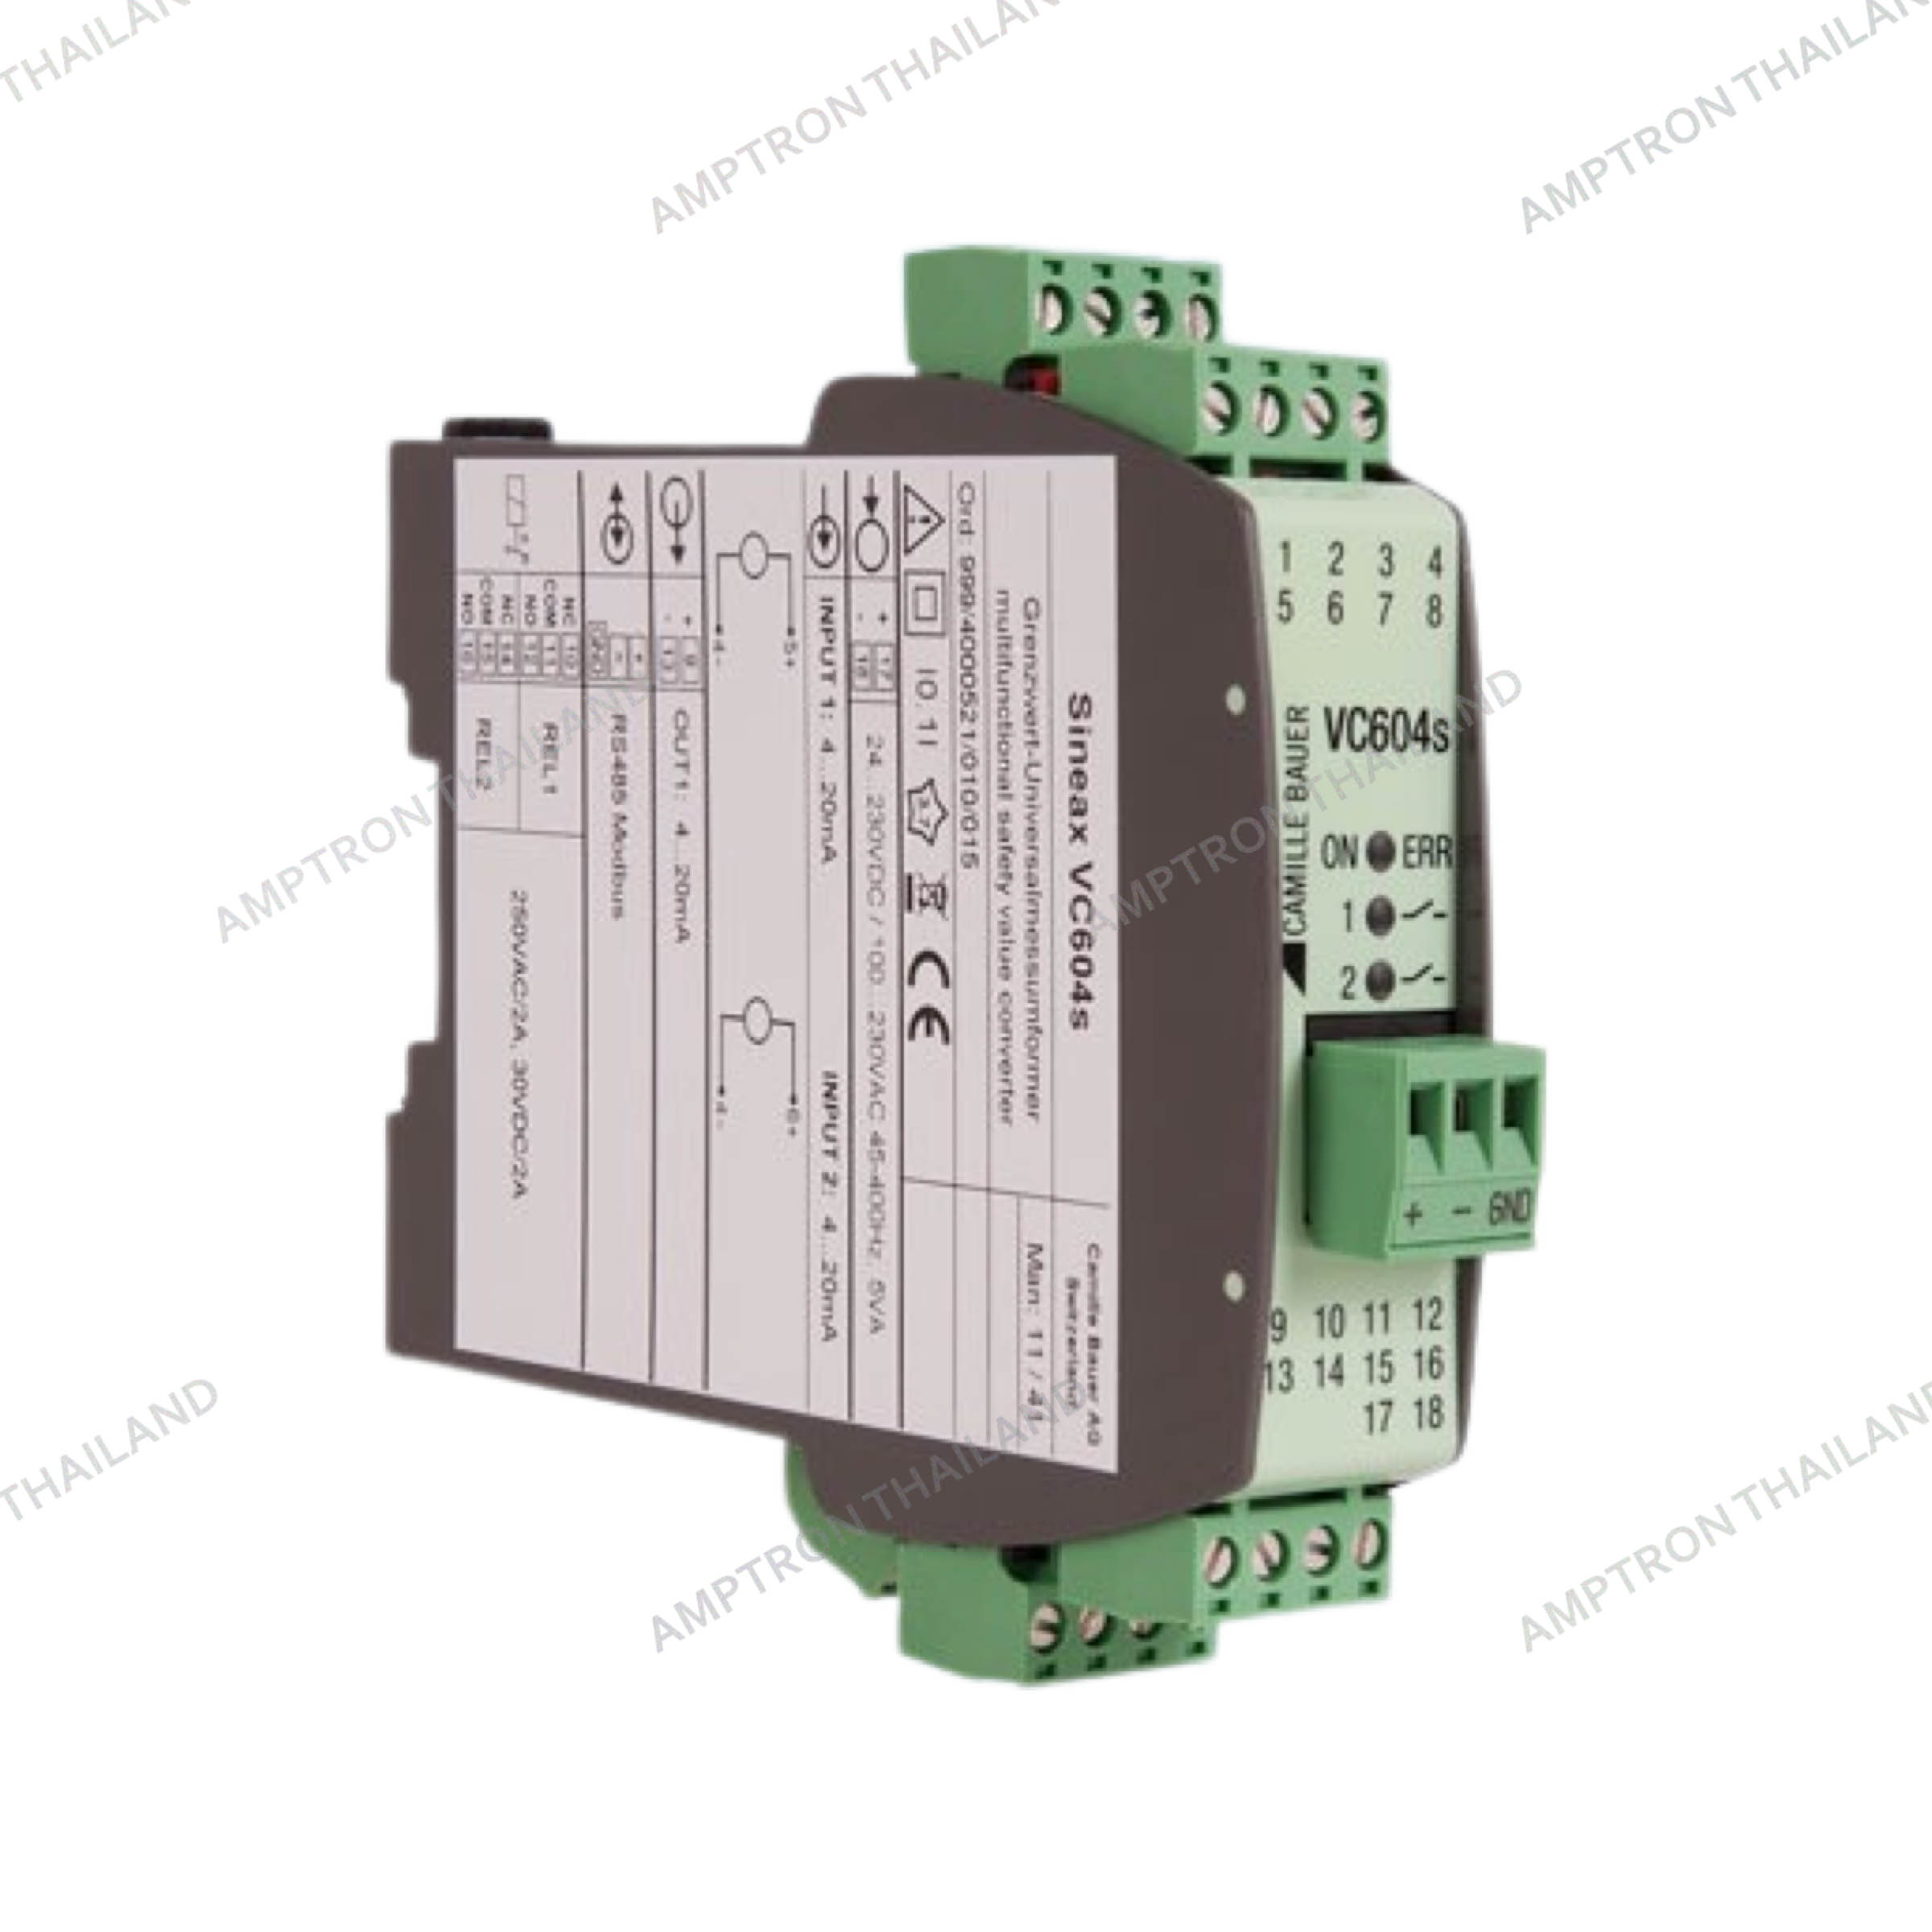 SINEAX VC604s Multifunctional transmitter